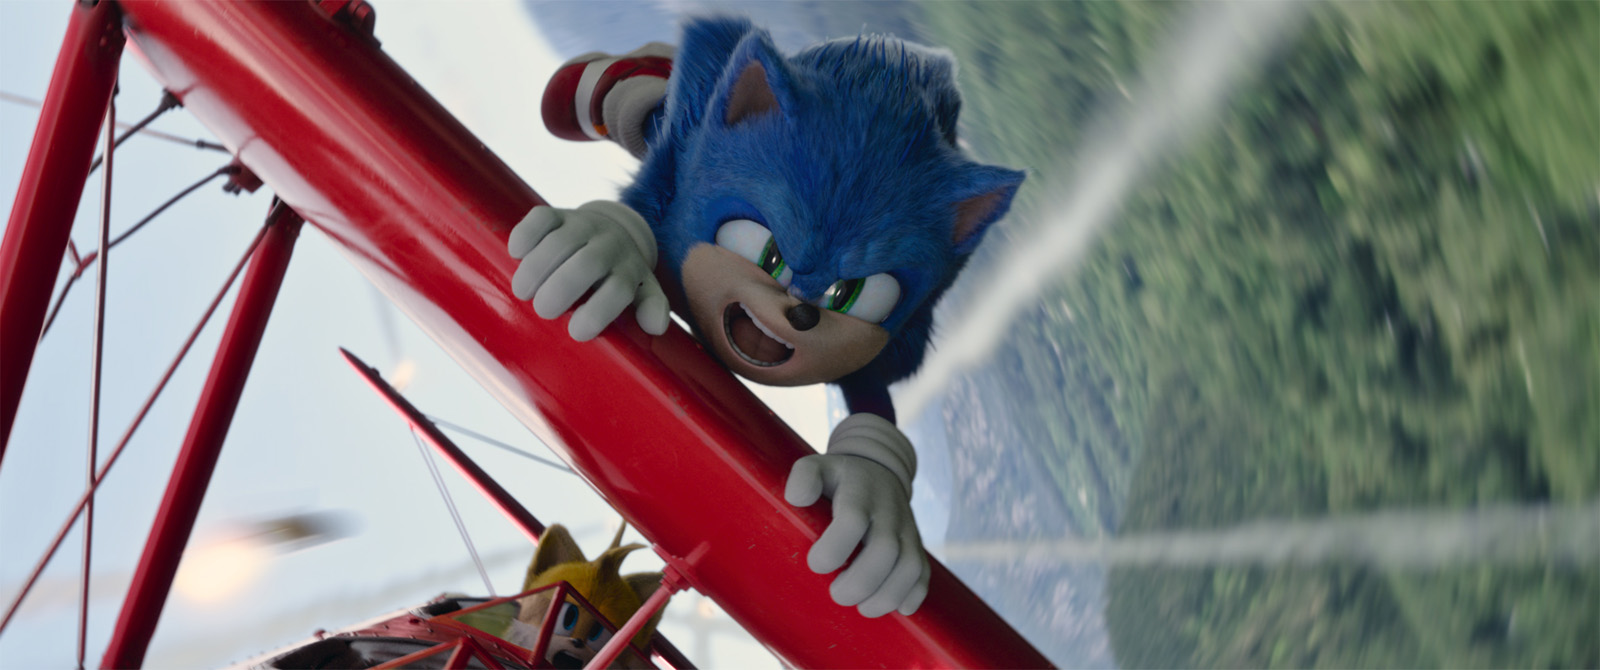 Szenenbild 4 vom Film Sonic The Hedgehog 2